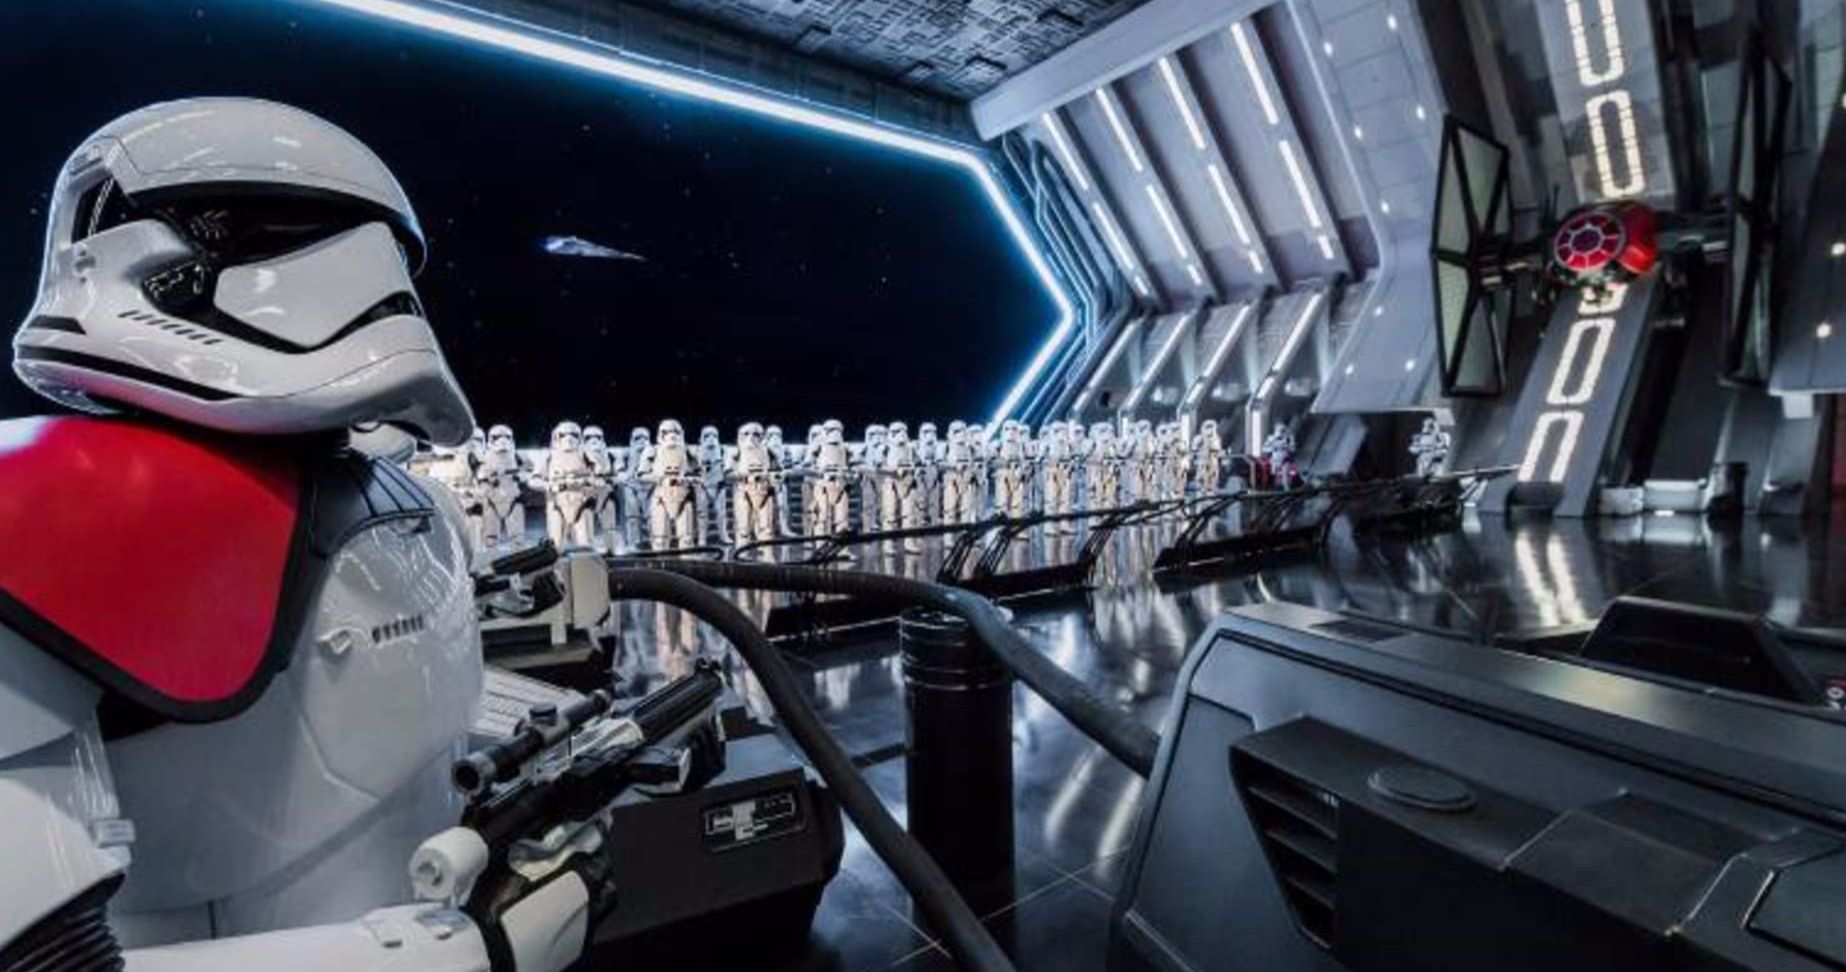 Rise of the Resistance Sneak Peek Reveals Disney's New Star Wars: Galaxy's Edge Ride